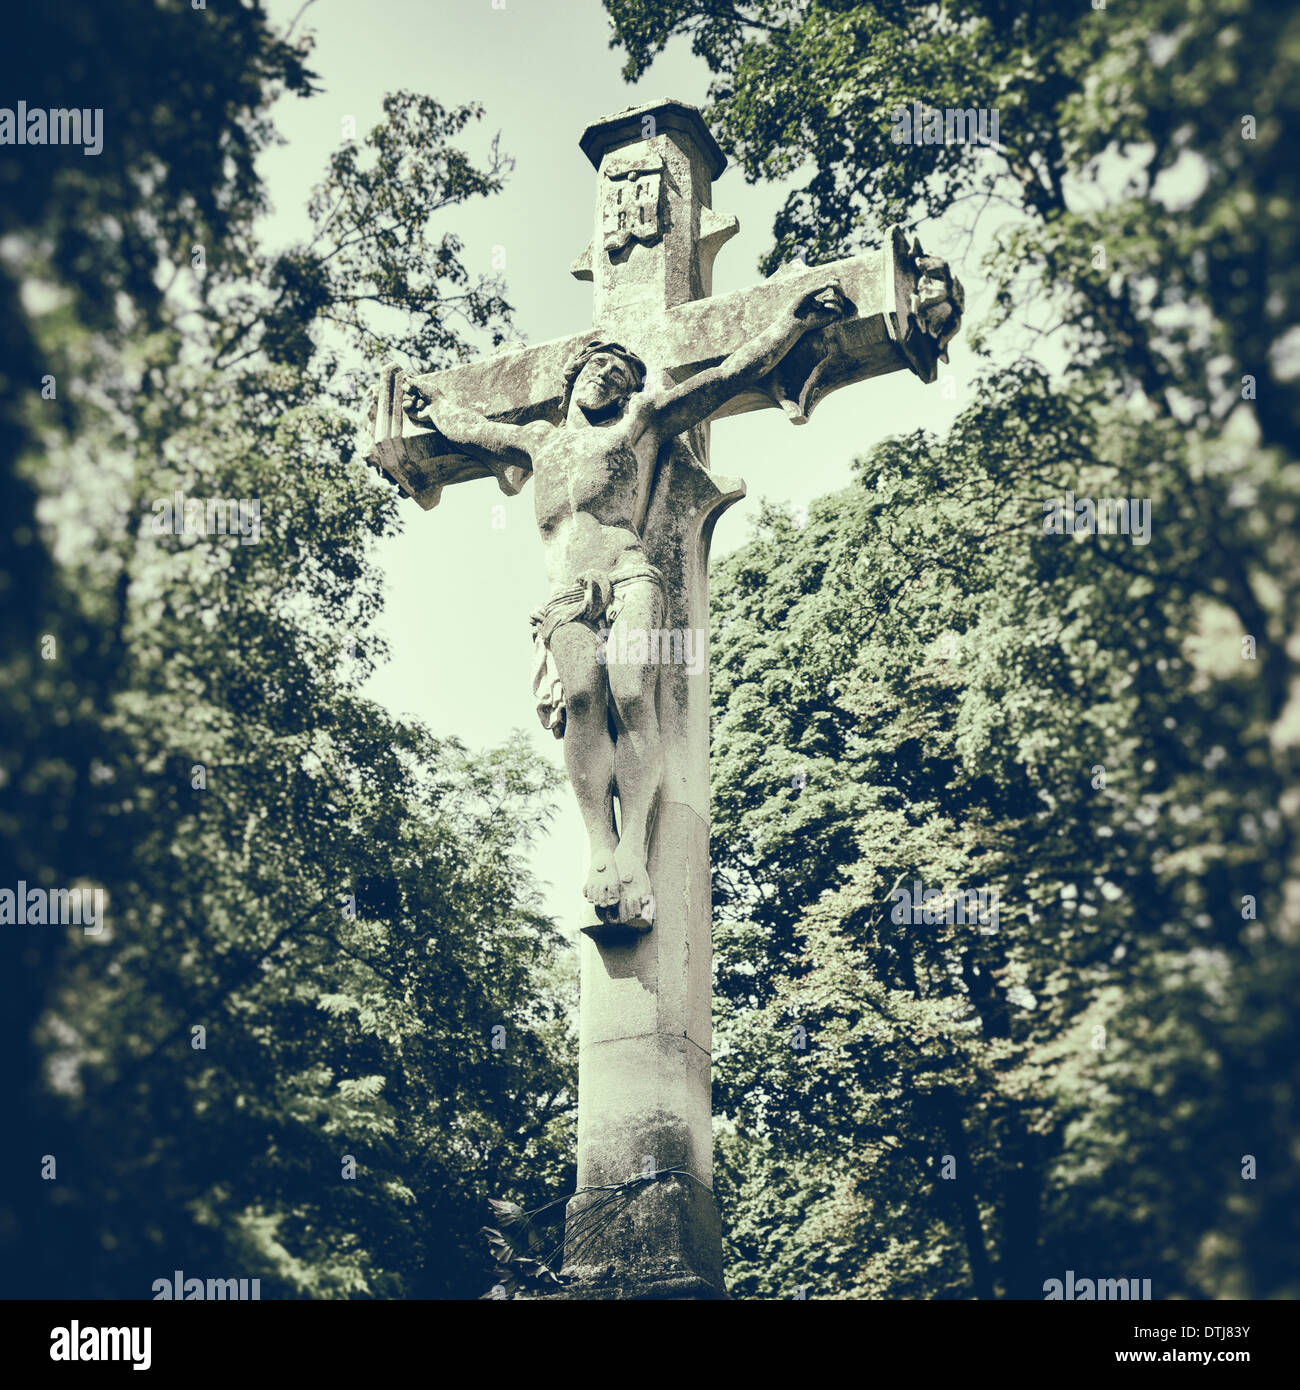 sculpture of Jesus on the cross, retro stylized photo Stock Photo